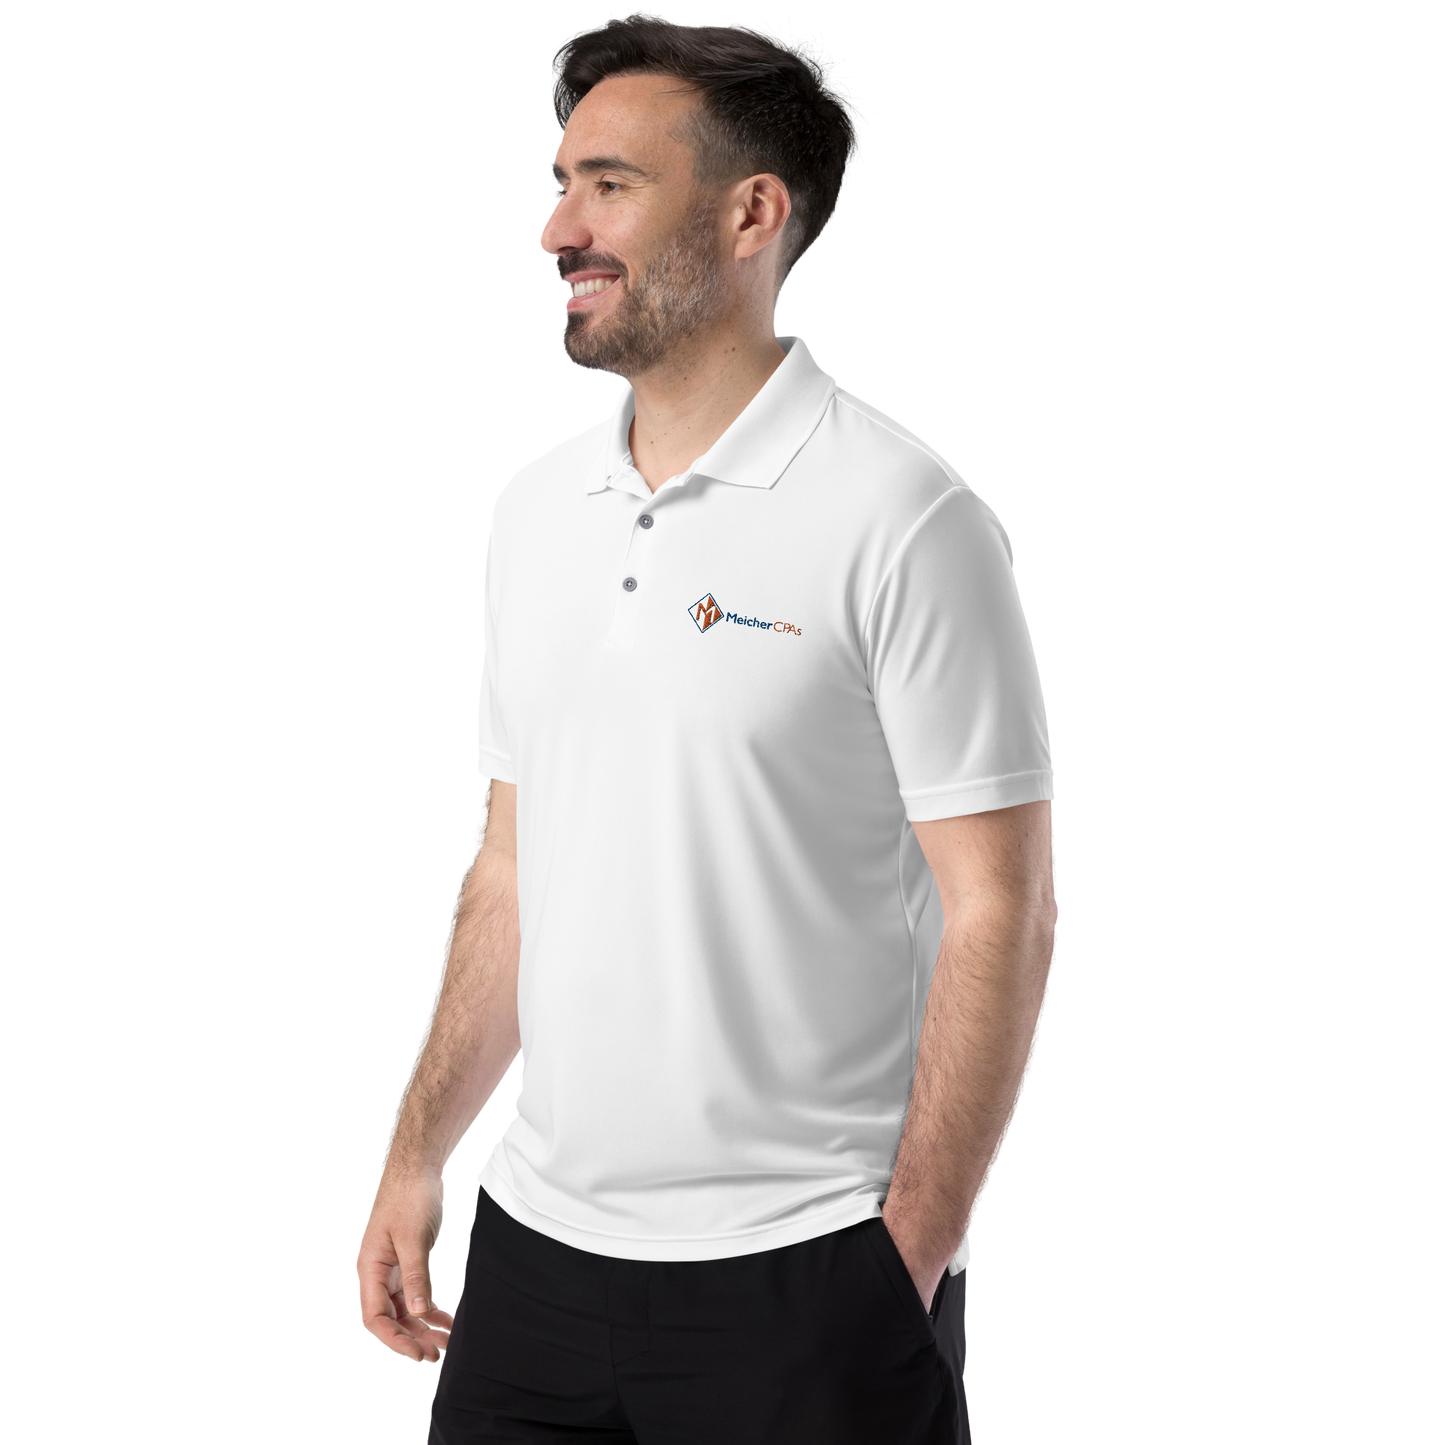 Meicher - Men's Adidas Performance Polo Shirt